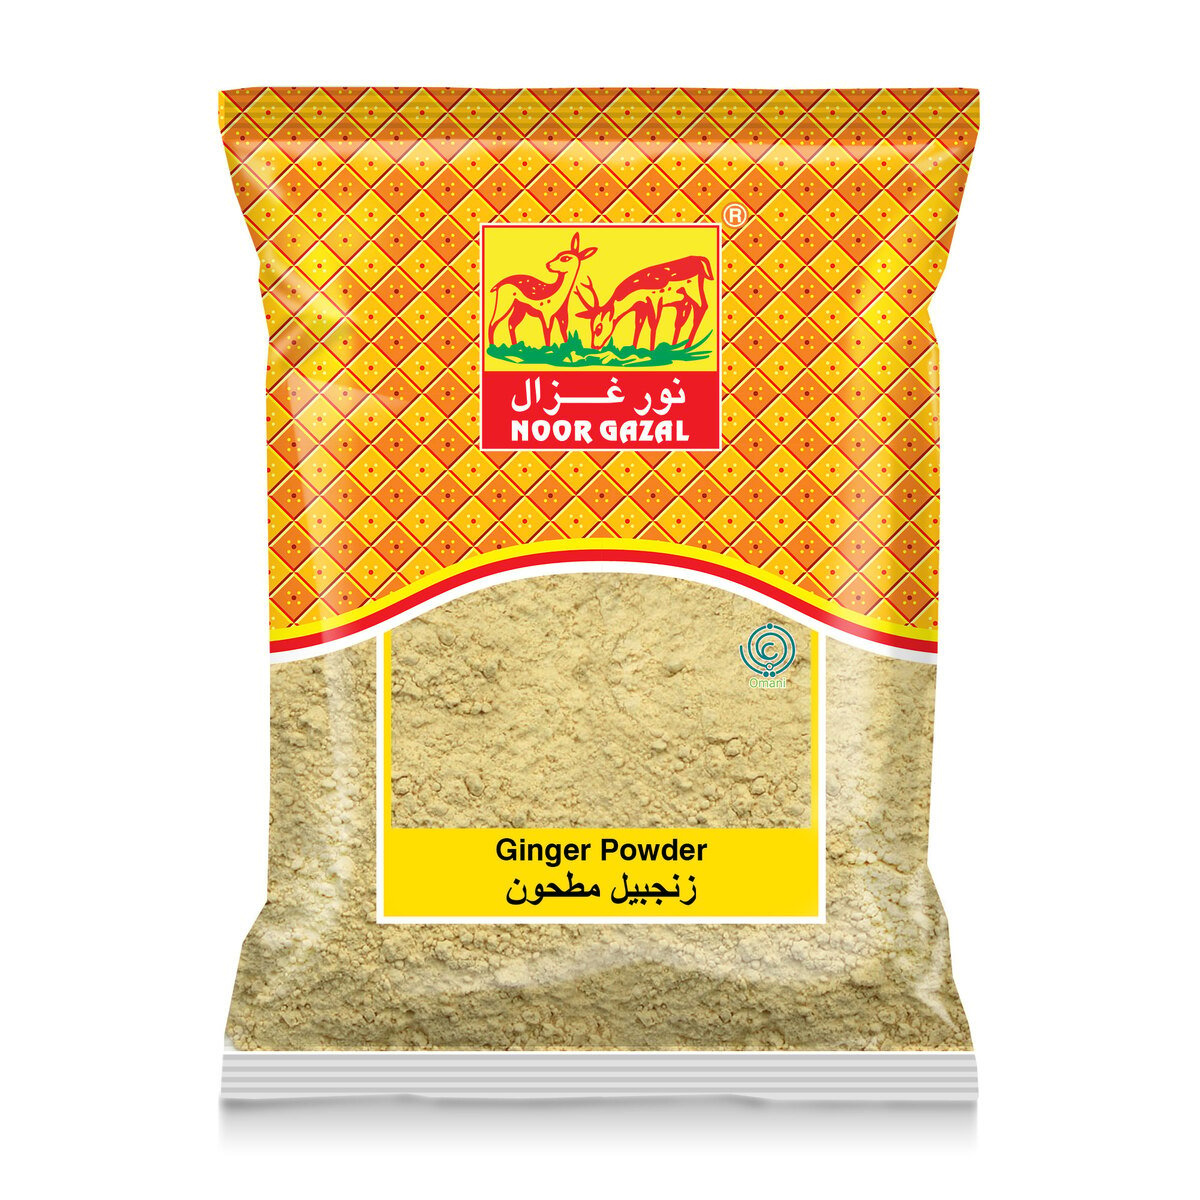 Noor Gazal Ginger Powder 500g